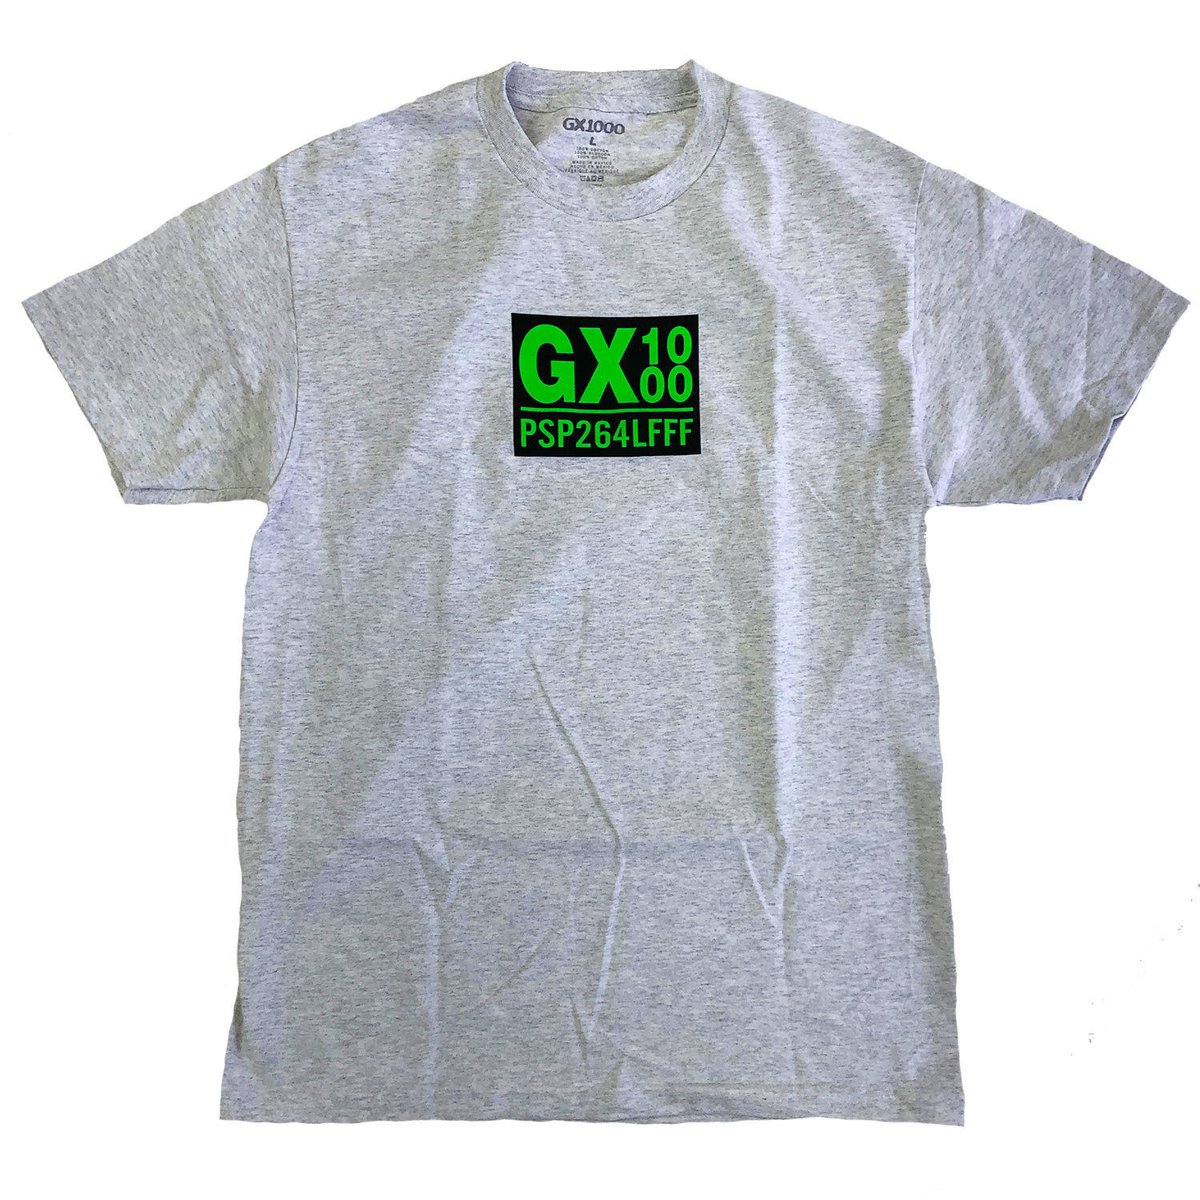 GX1000 THE VISION TEE  ASH GREY XL